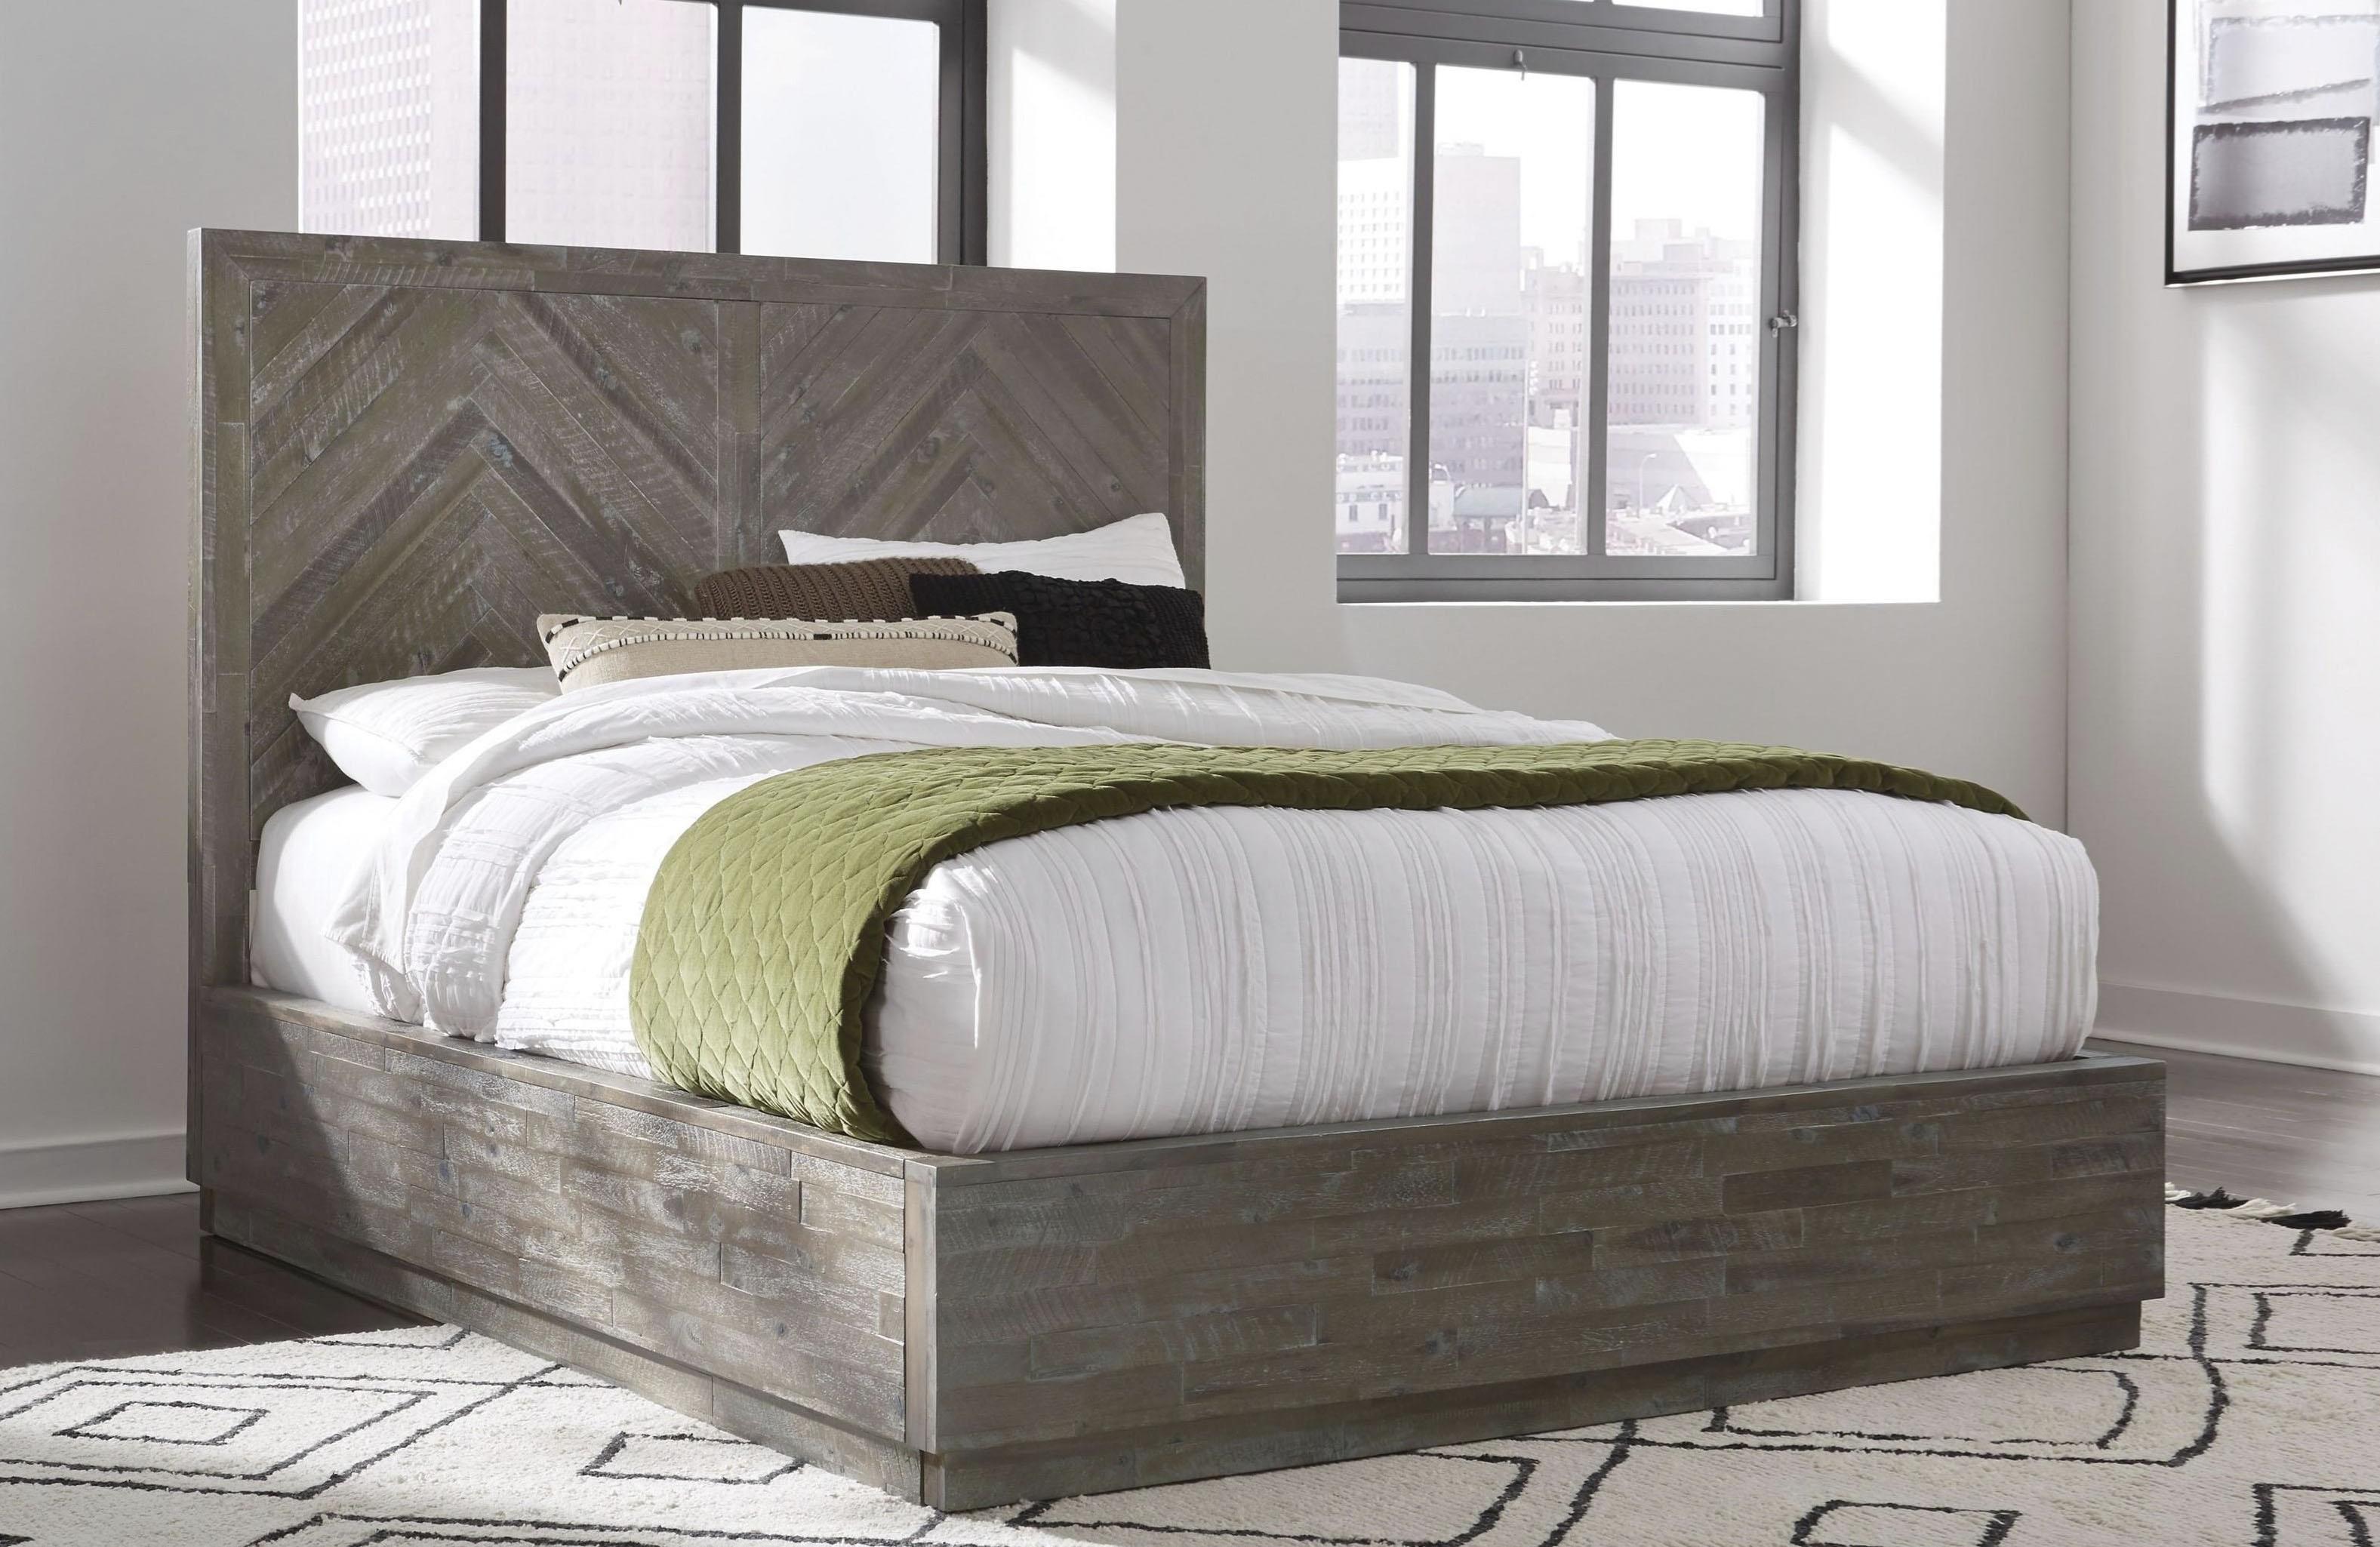 

    
Acacia Wood Rustic Latte Finish King Platform Bed HERRINGBONE by Modus Furniture
